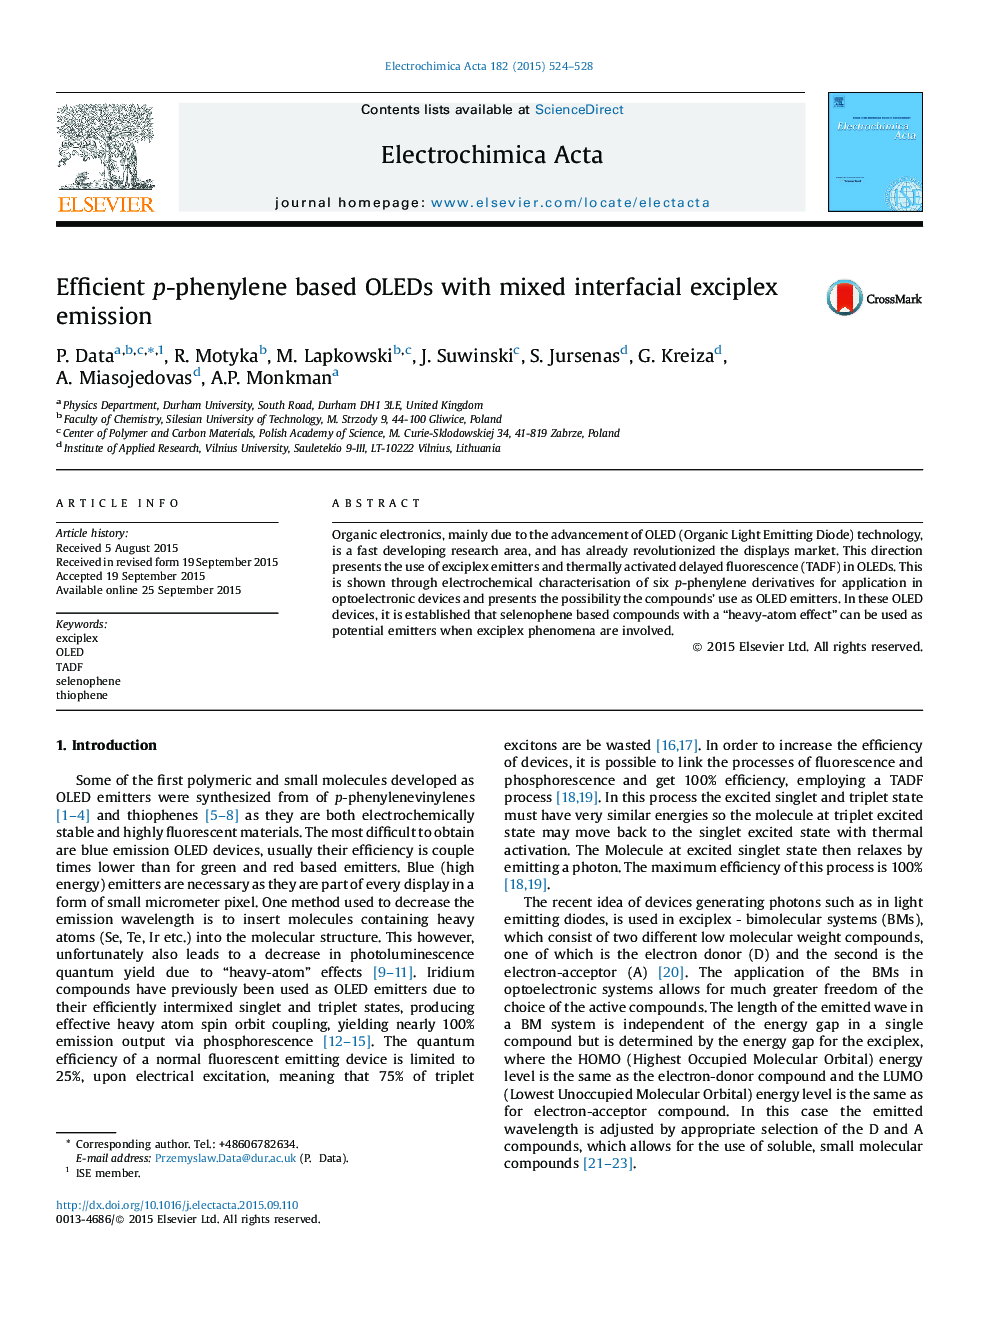 Efficient p-phenylene based OLEDs with mixed interfacial exciplex emission